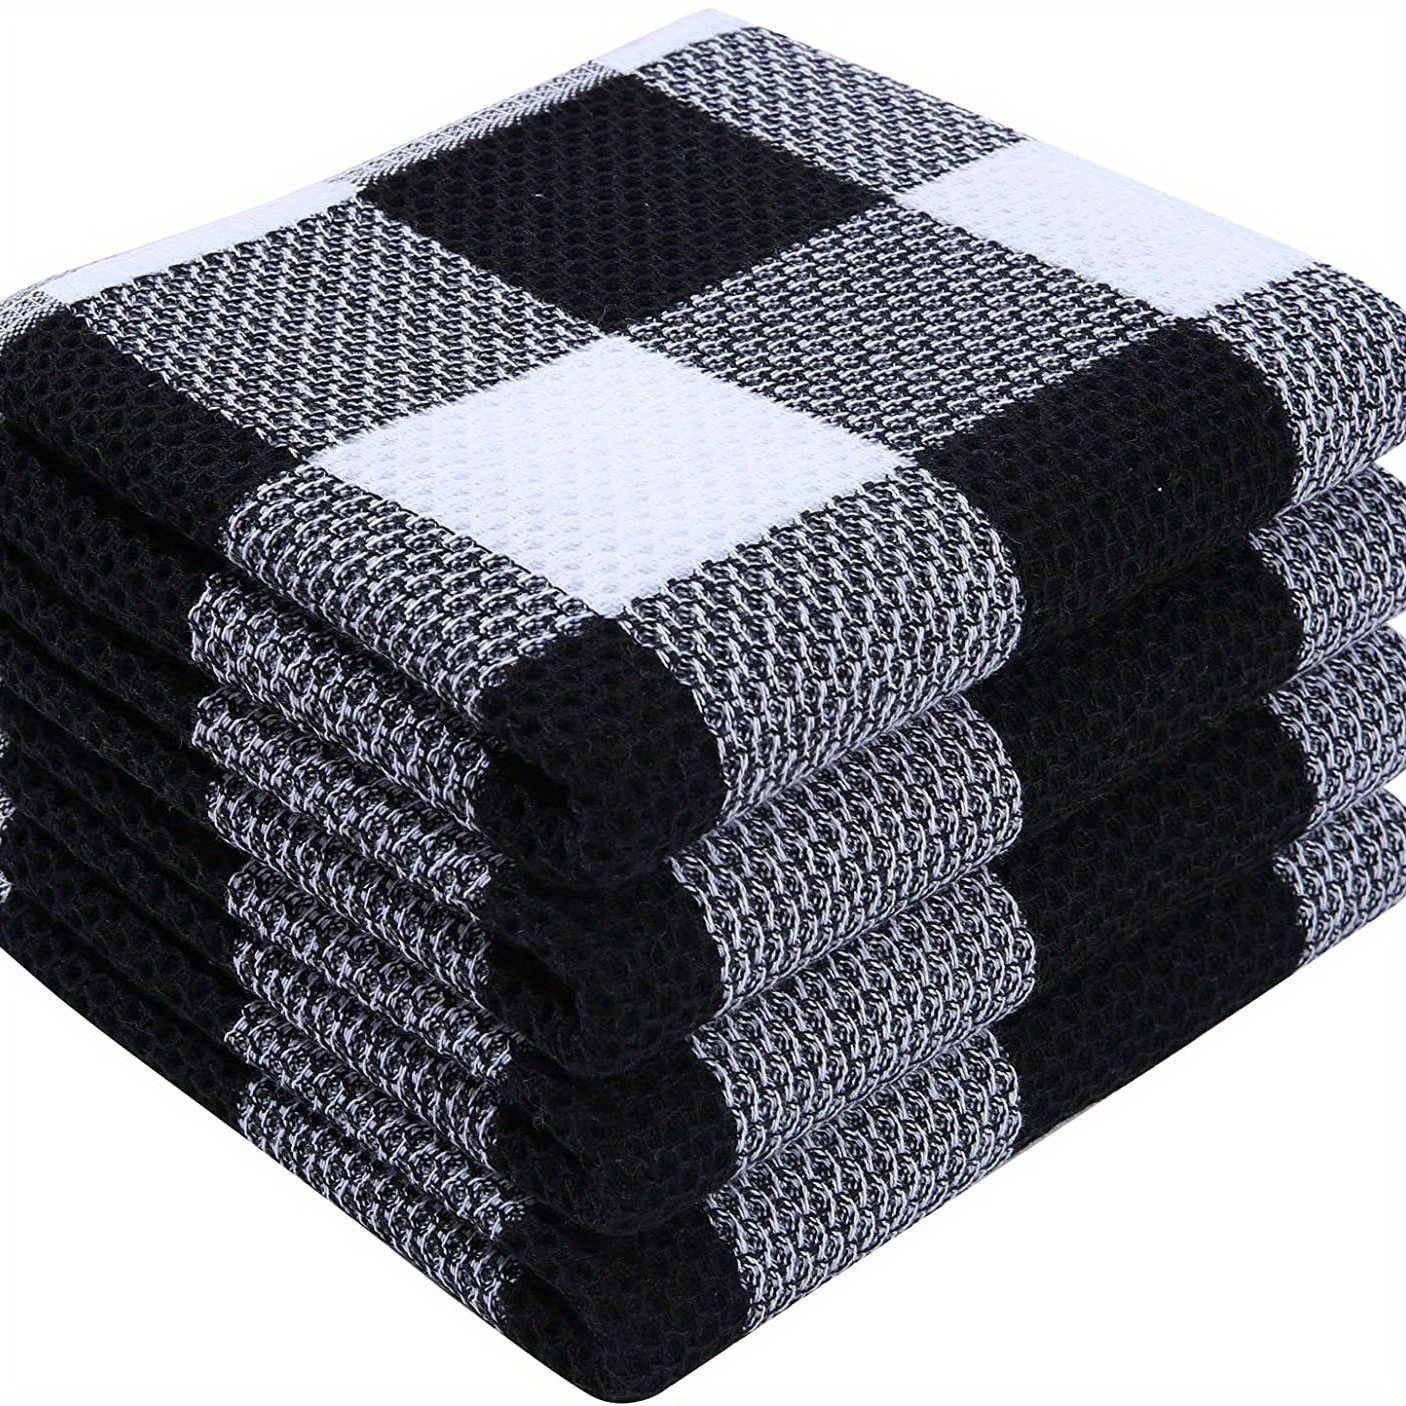 Striped Dish Cloths, Waffle Square Plaid Dishwashing Towels